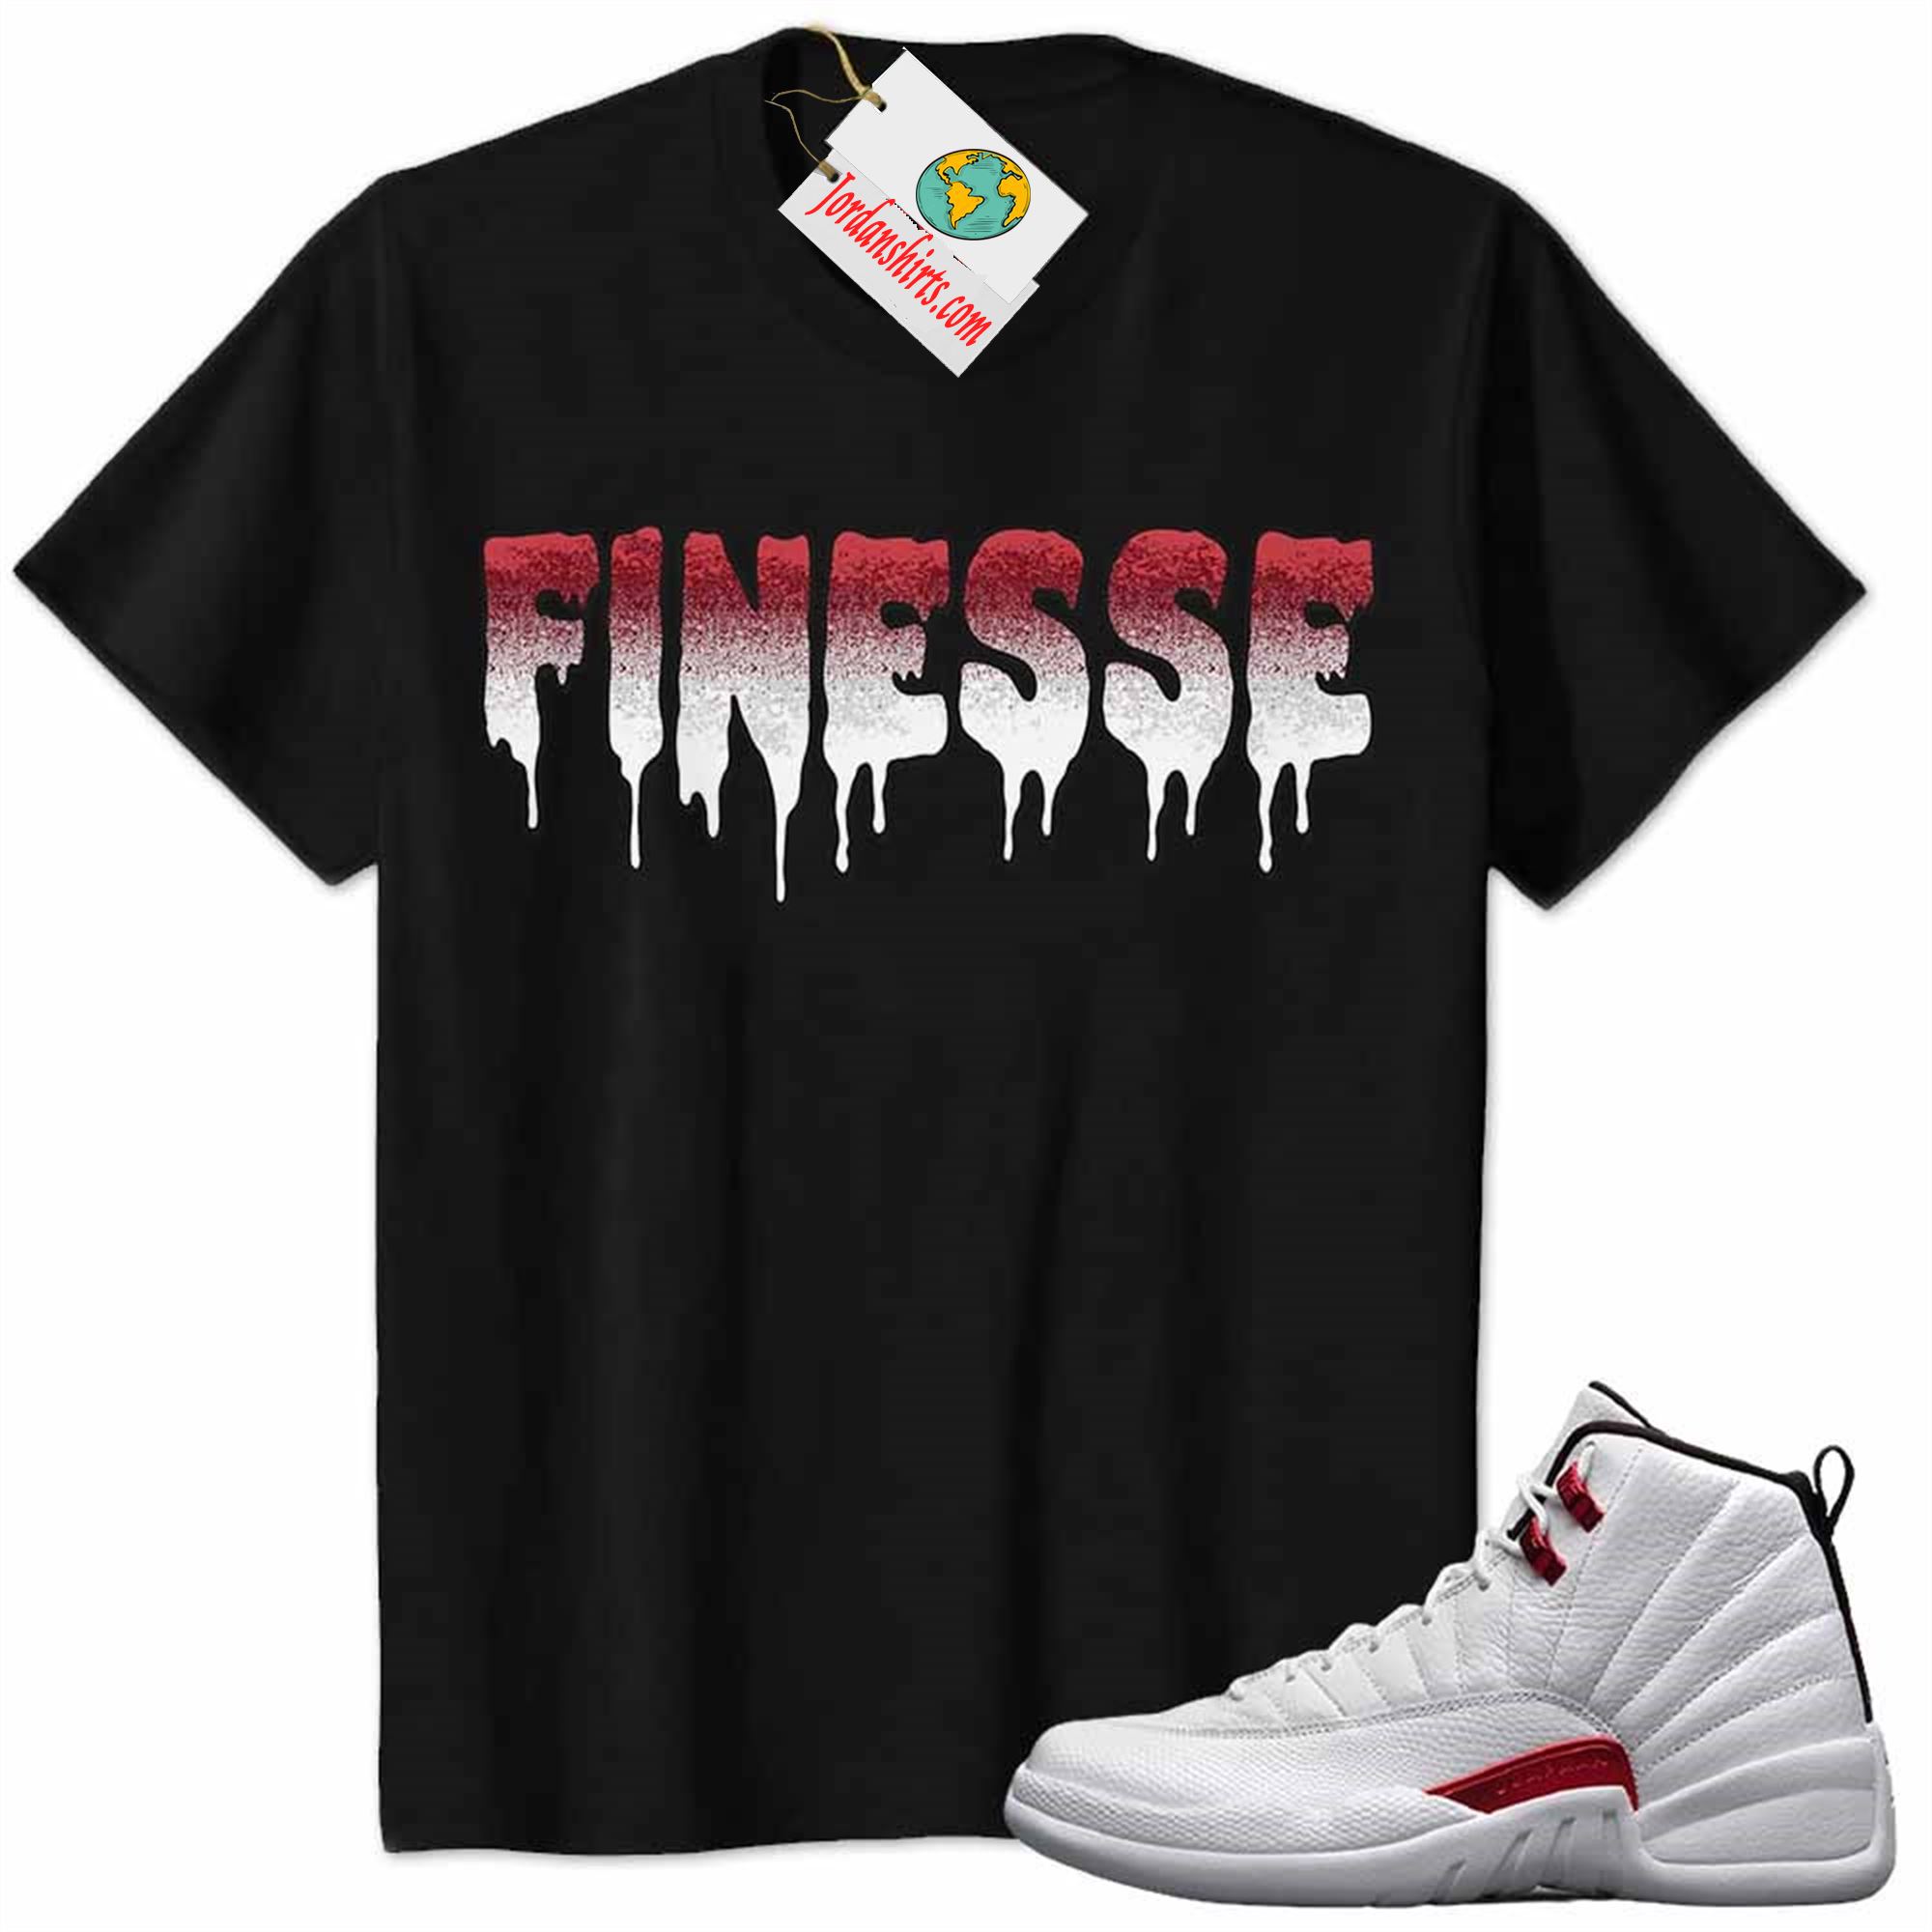 Jordan 12 Shirt, Jordan 12 Twist Shirt Finesse Drip Black Plus Size Up To 5xl